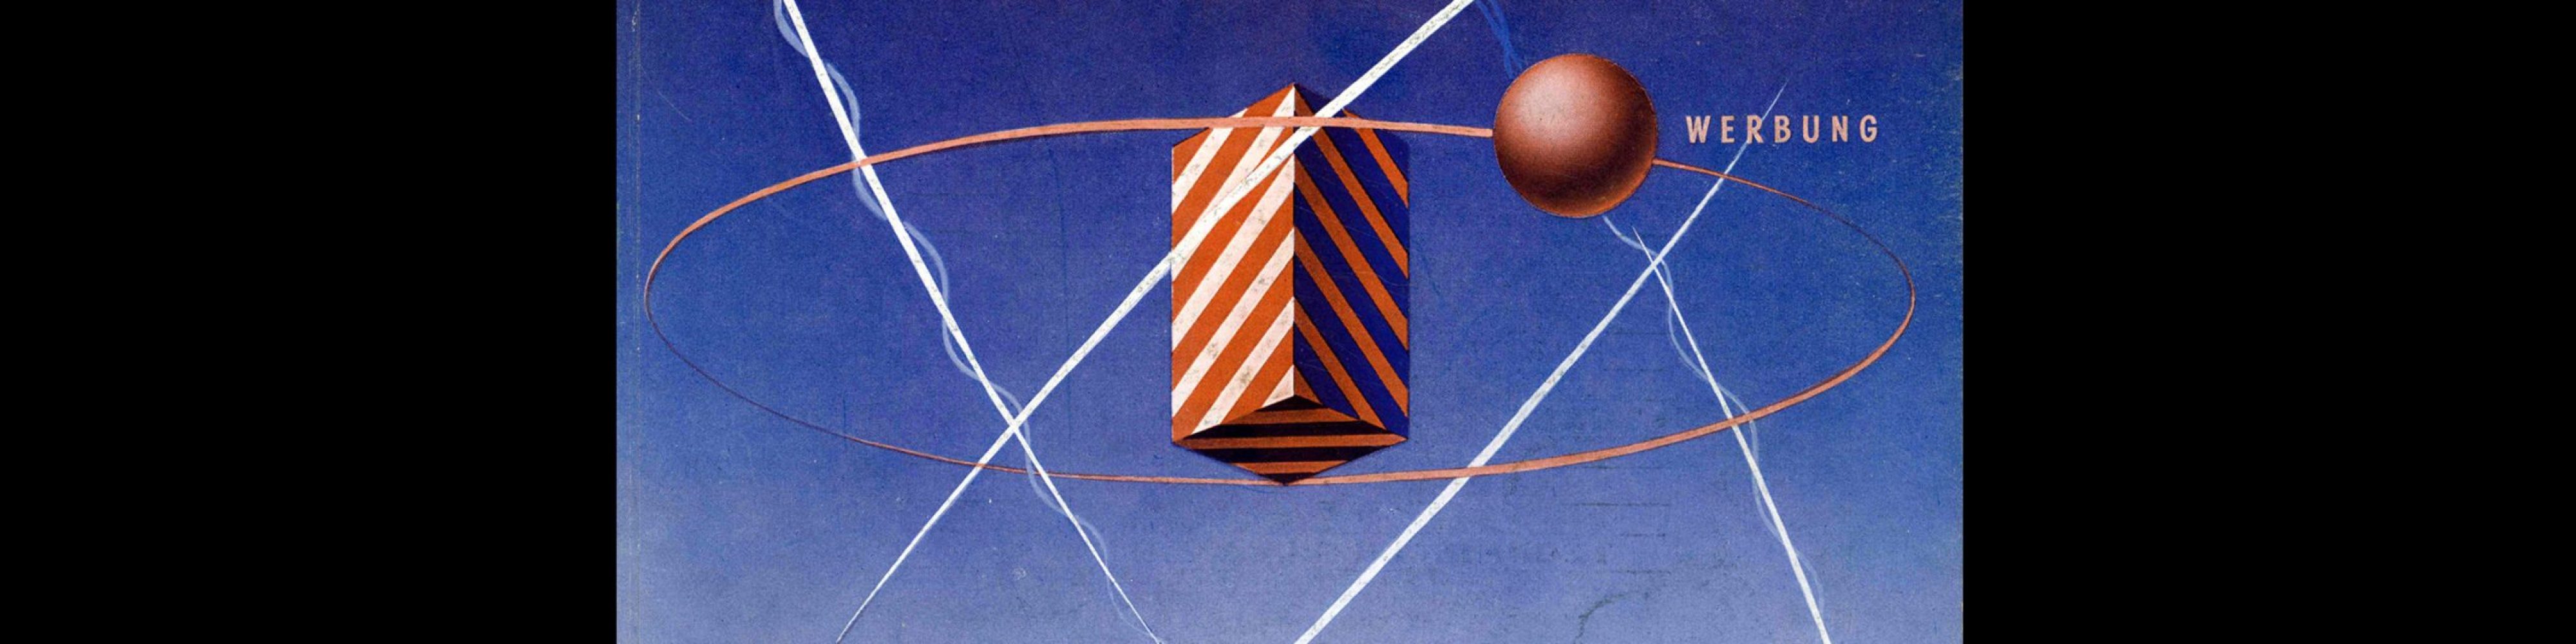 Graphik – Werbung + Formgebung, 7, 1950. Cover design by Kurt Kranz